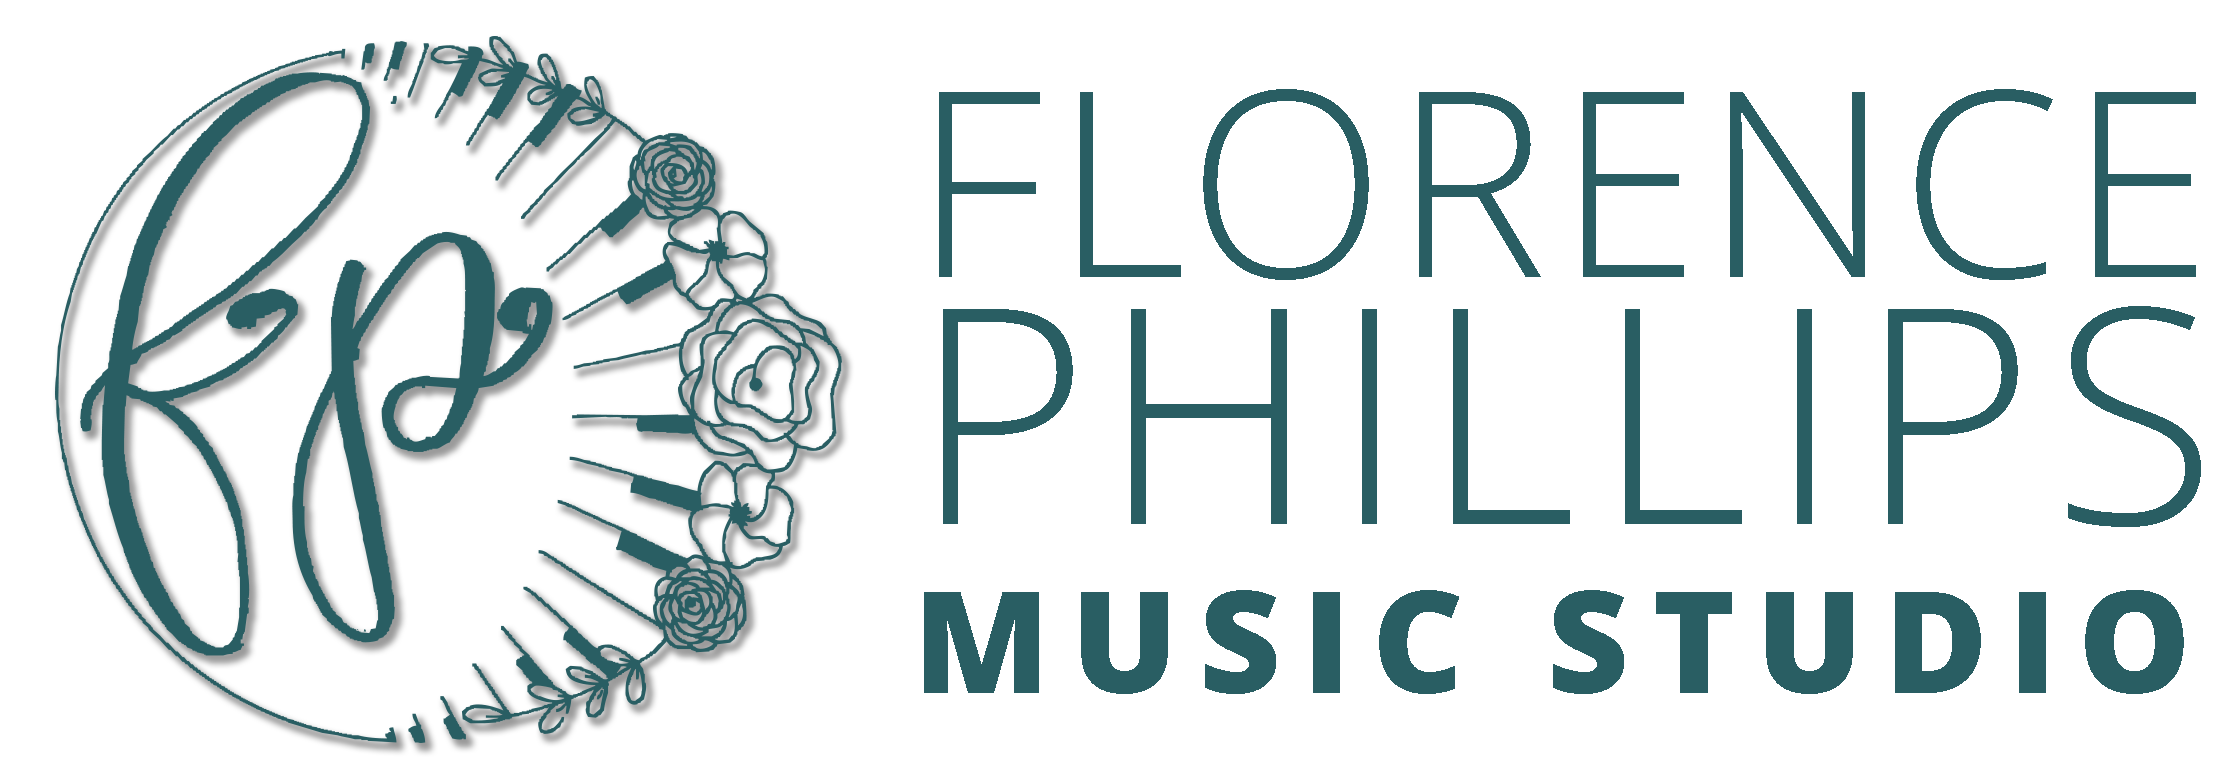 Florence Phillips Music Studio